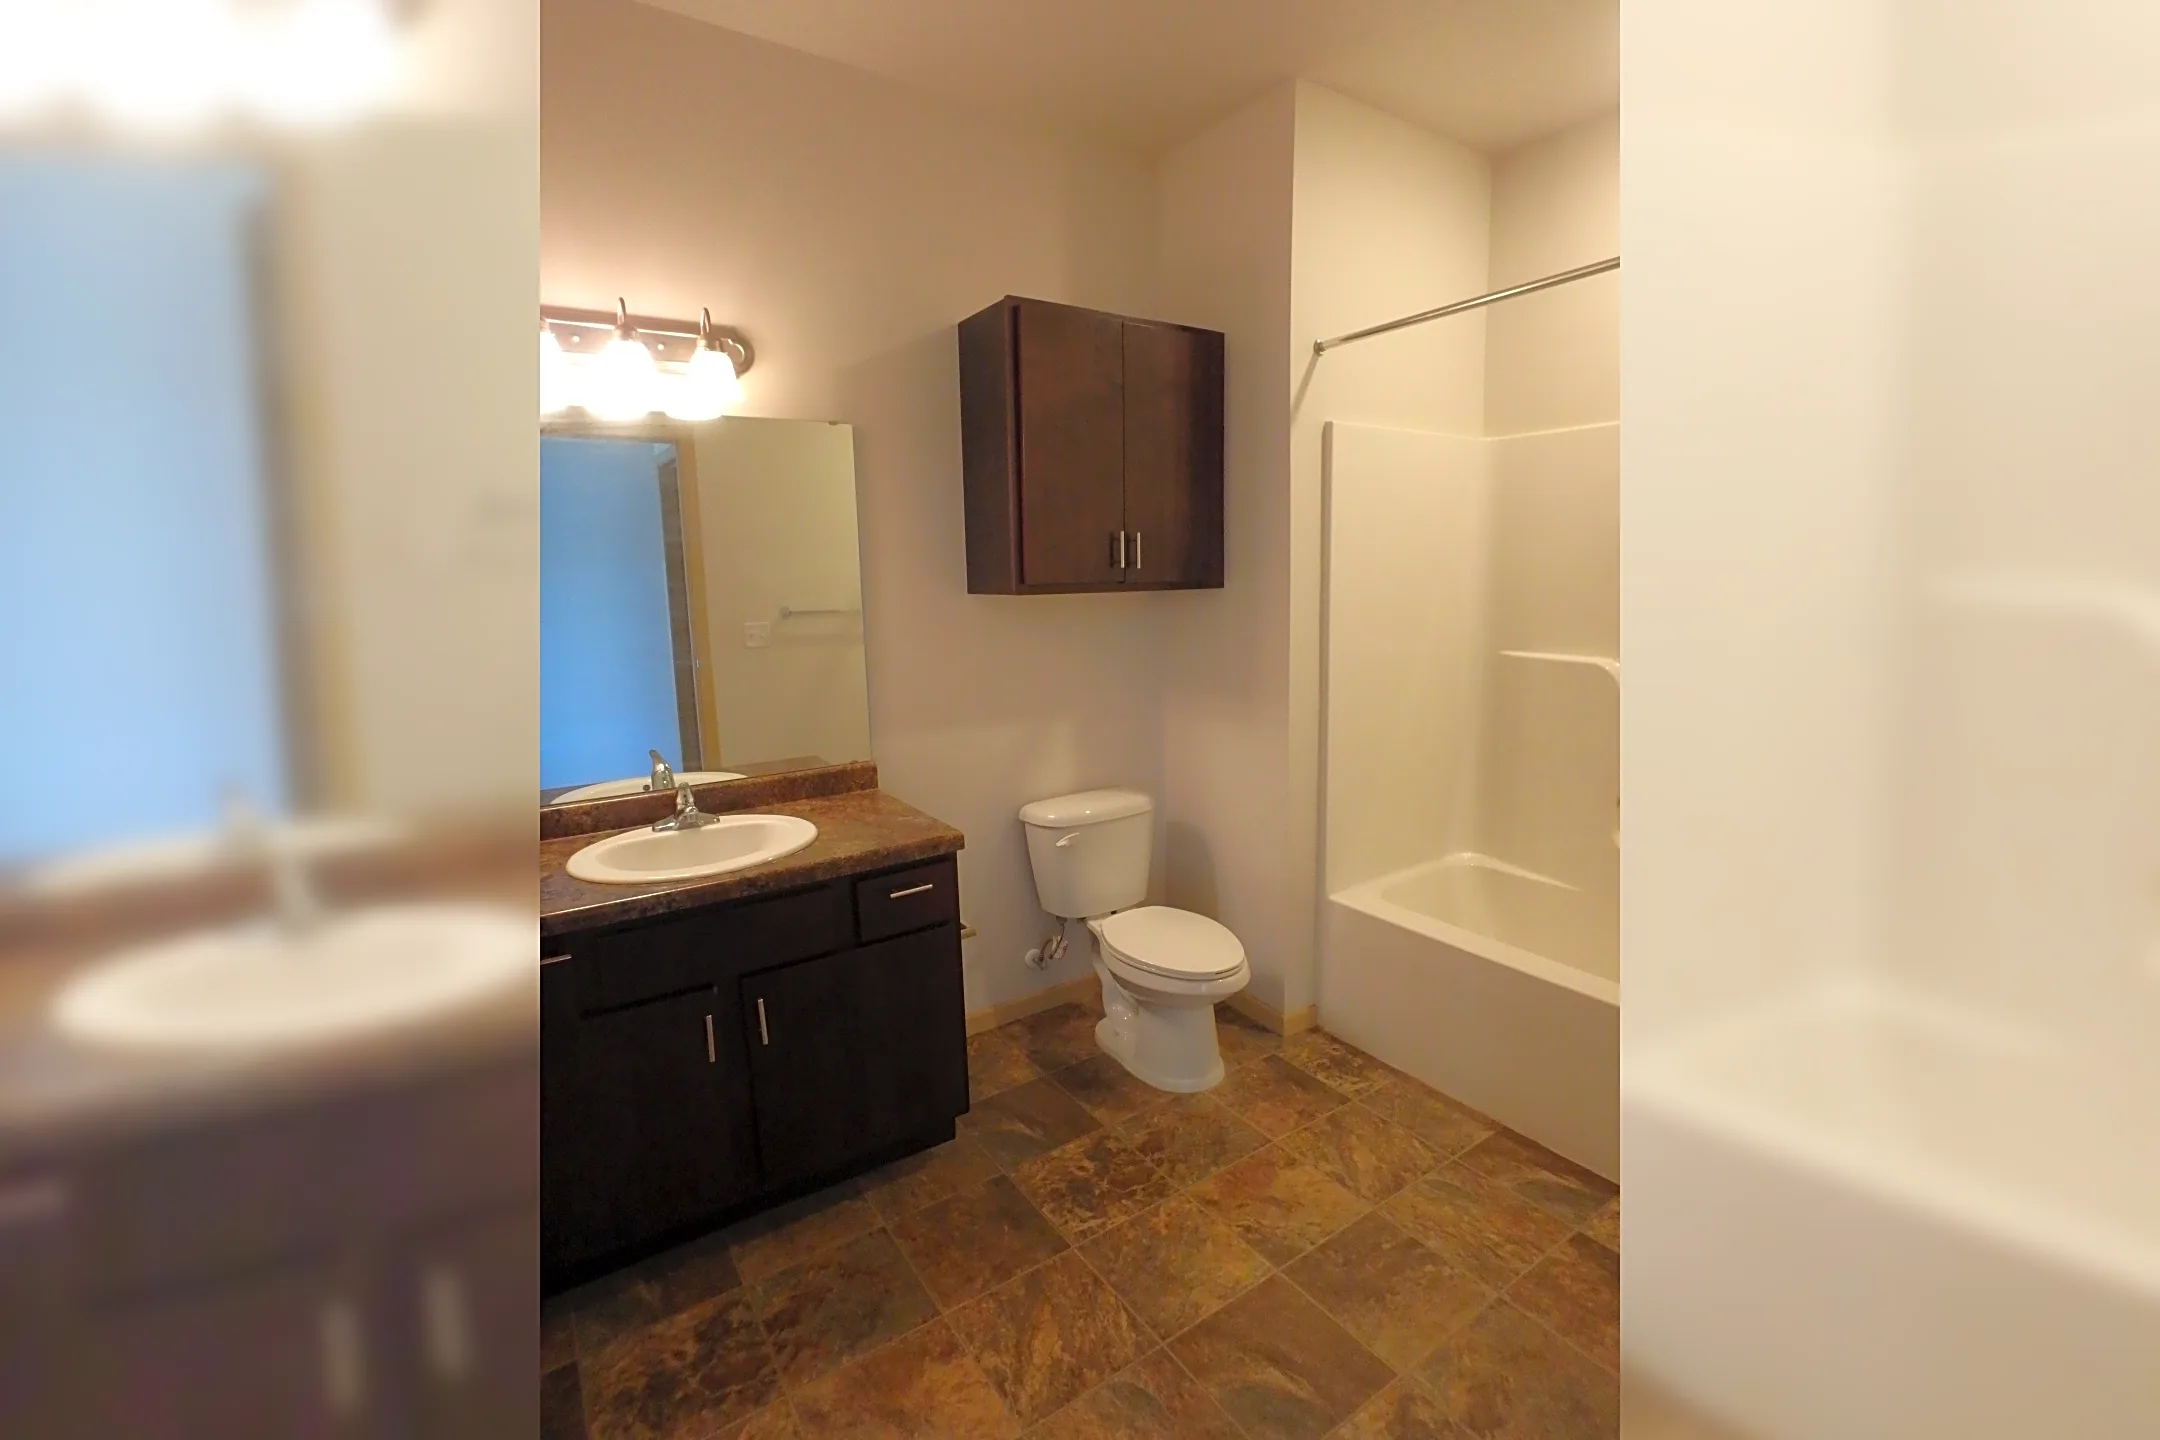 Bathroom - The Cascades Apartments - Fargo, ND